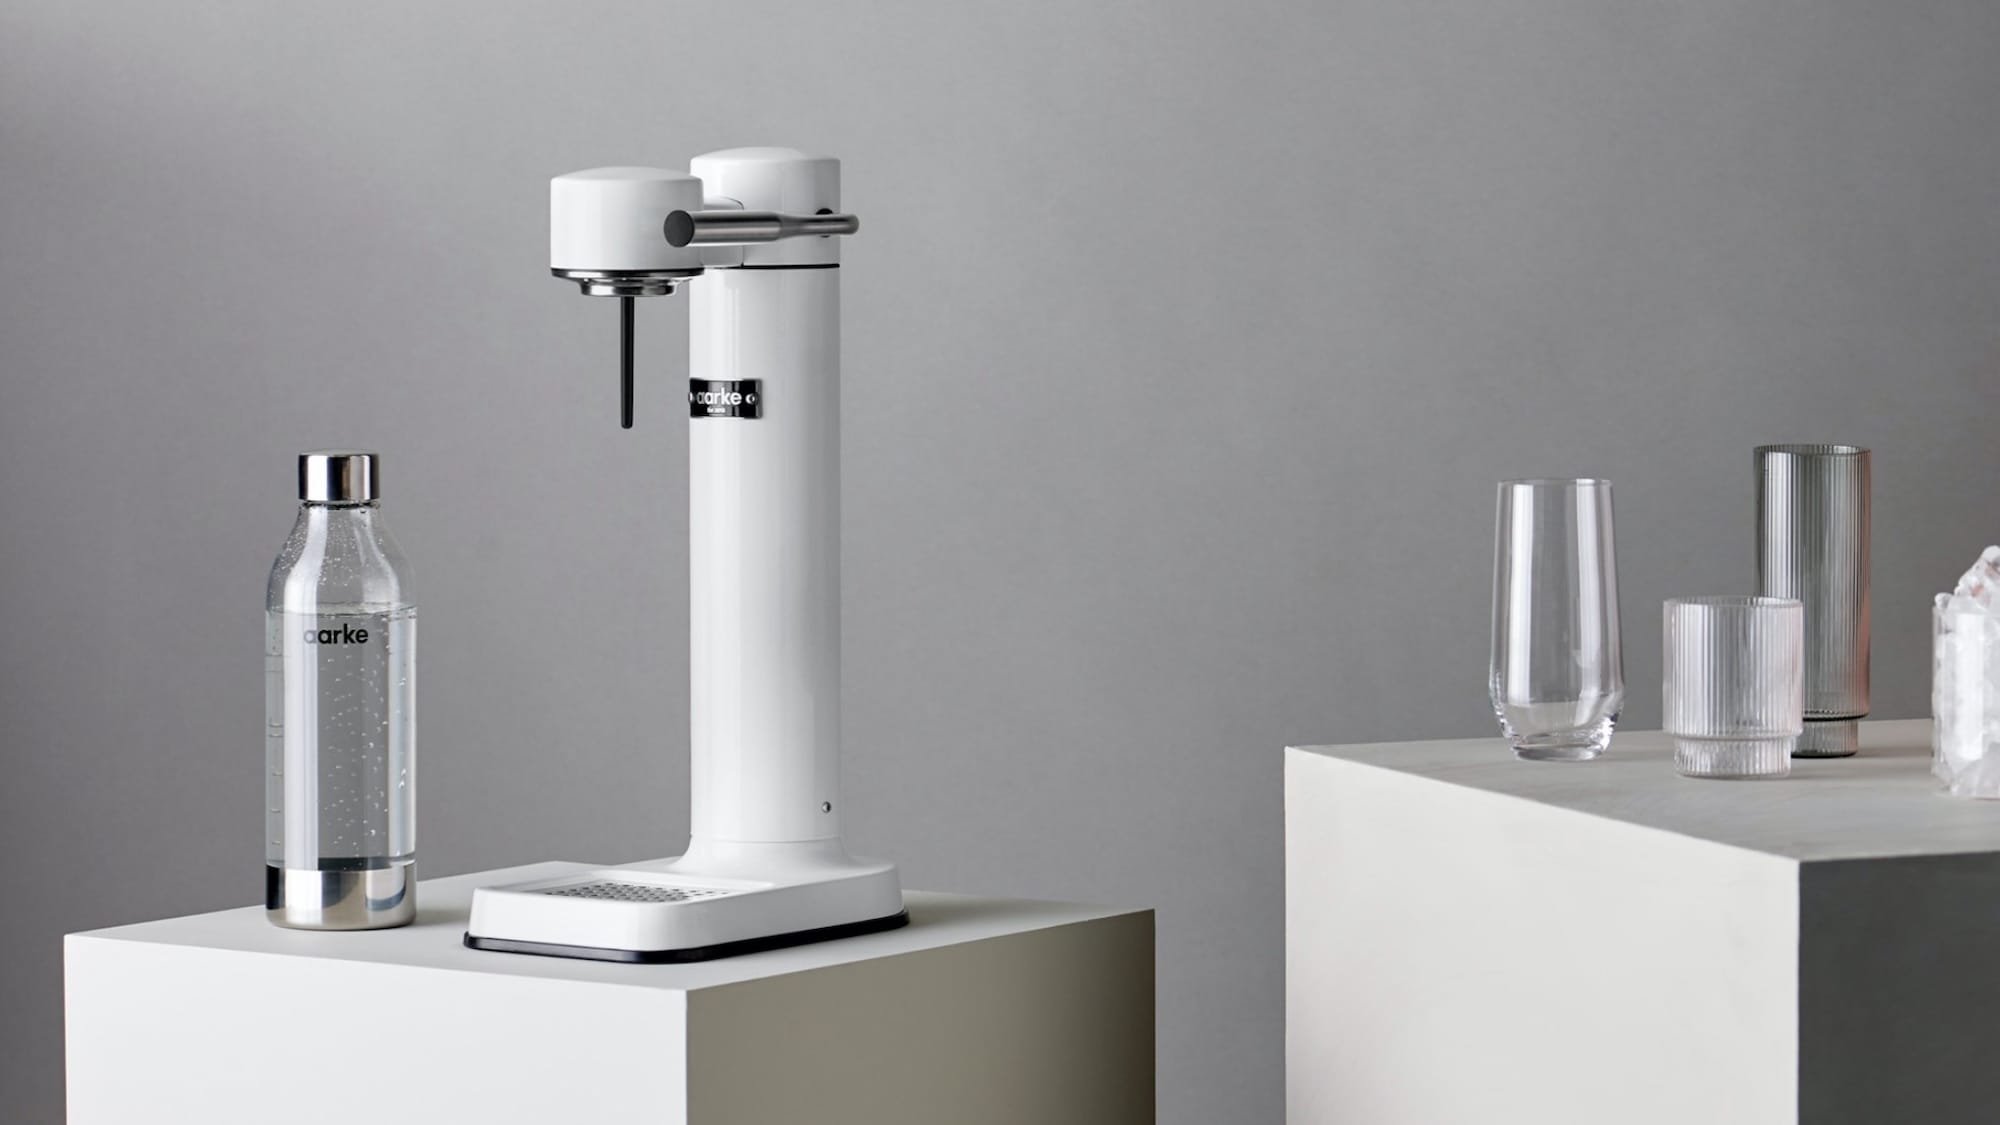 Aarke Carbonator II home sparkling water machine consists of premium materials